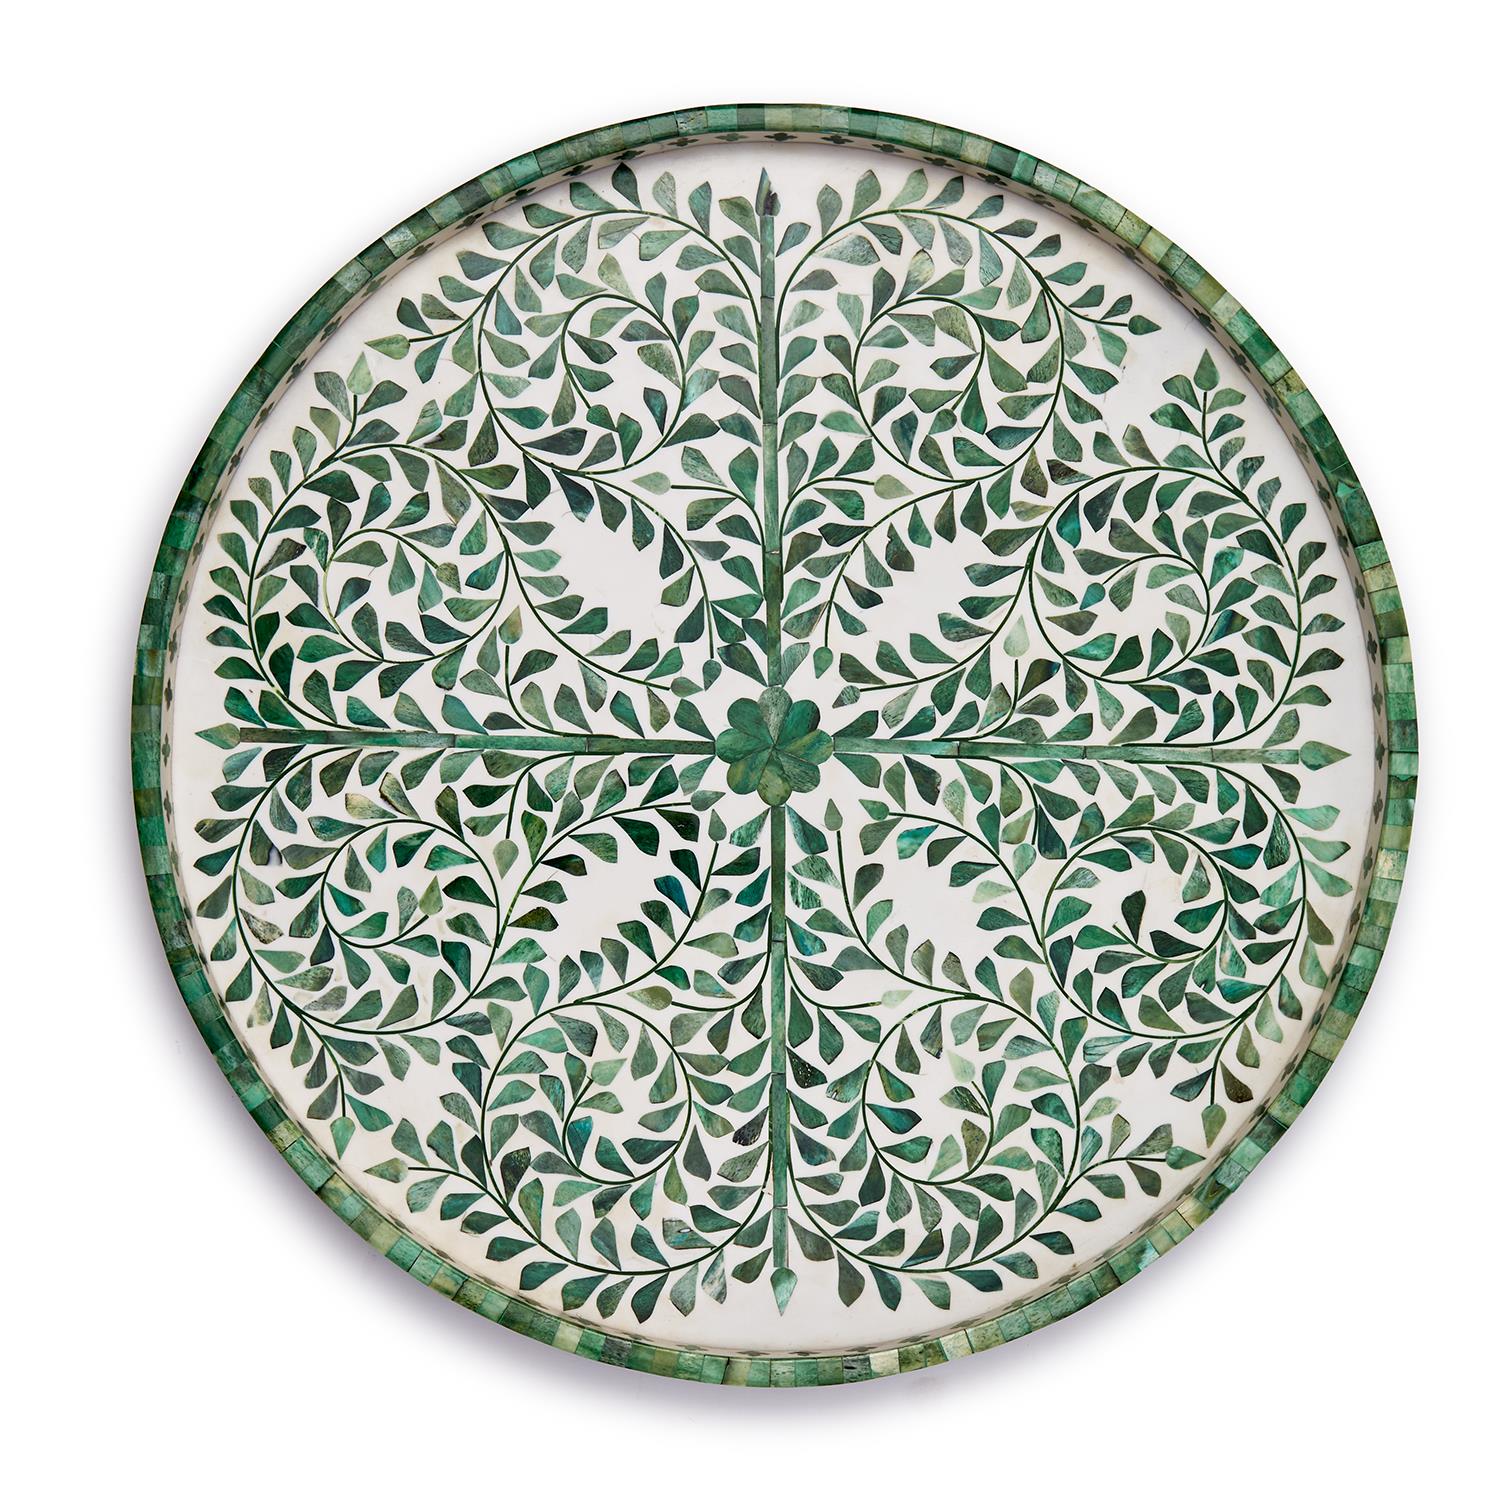 Jaipur Palace Green/White Inlaid Decorative Round Serving Tray